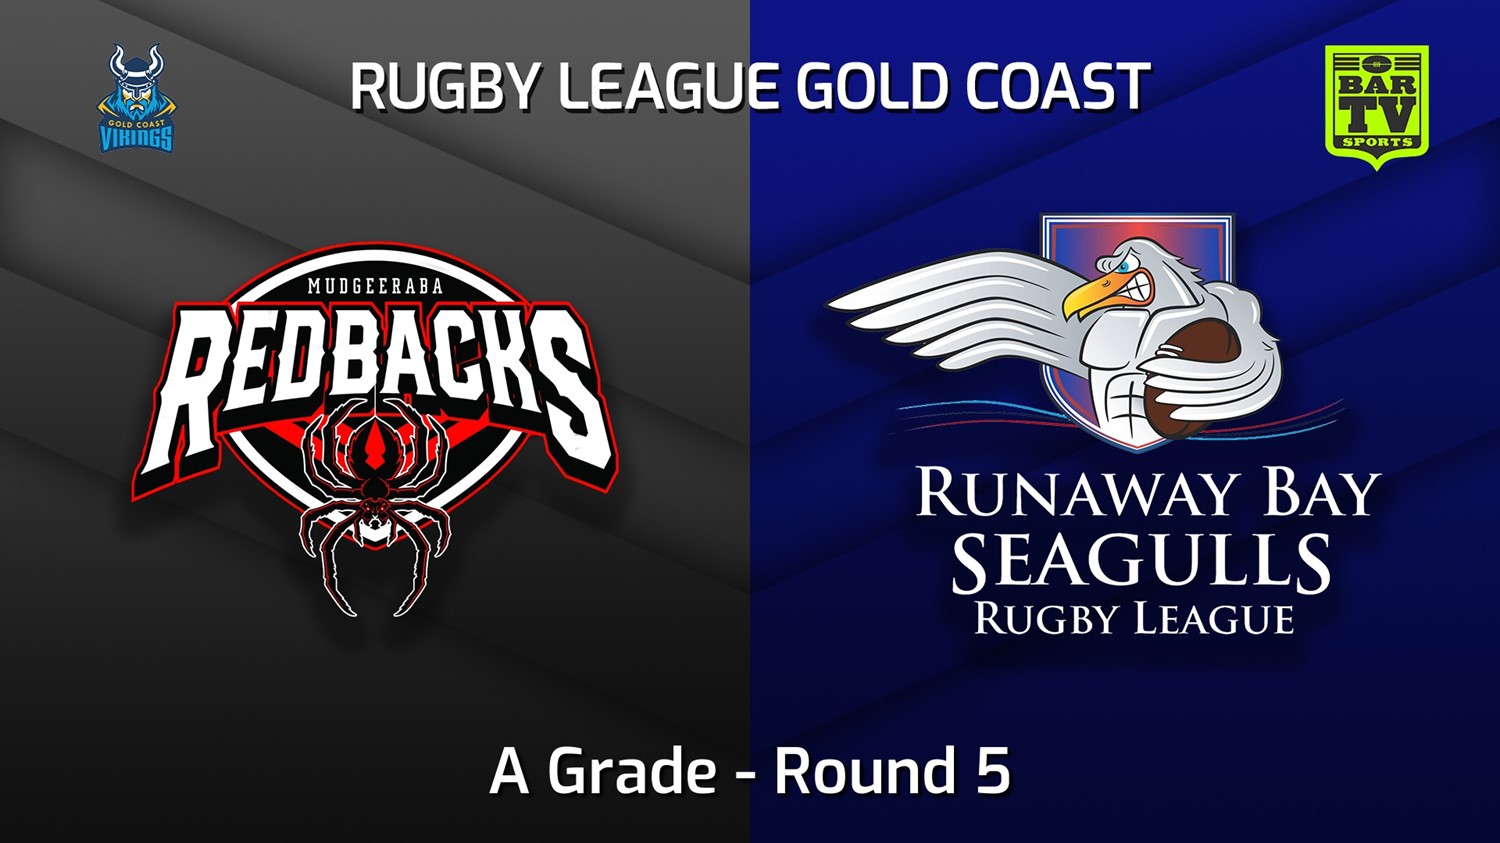 220508-Gold Coast Round 5 - A Grade - Mudgeeraba Redbacks v Runaway Bay Seagulls Slate Image